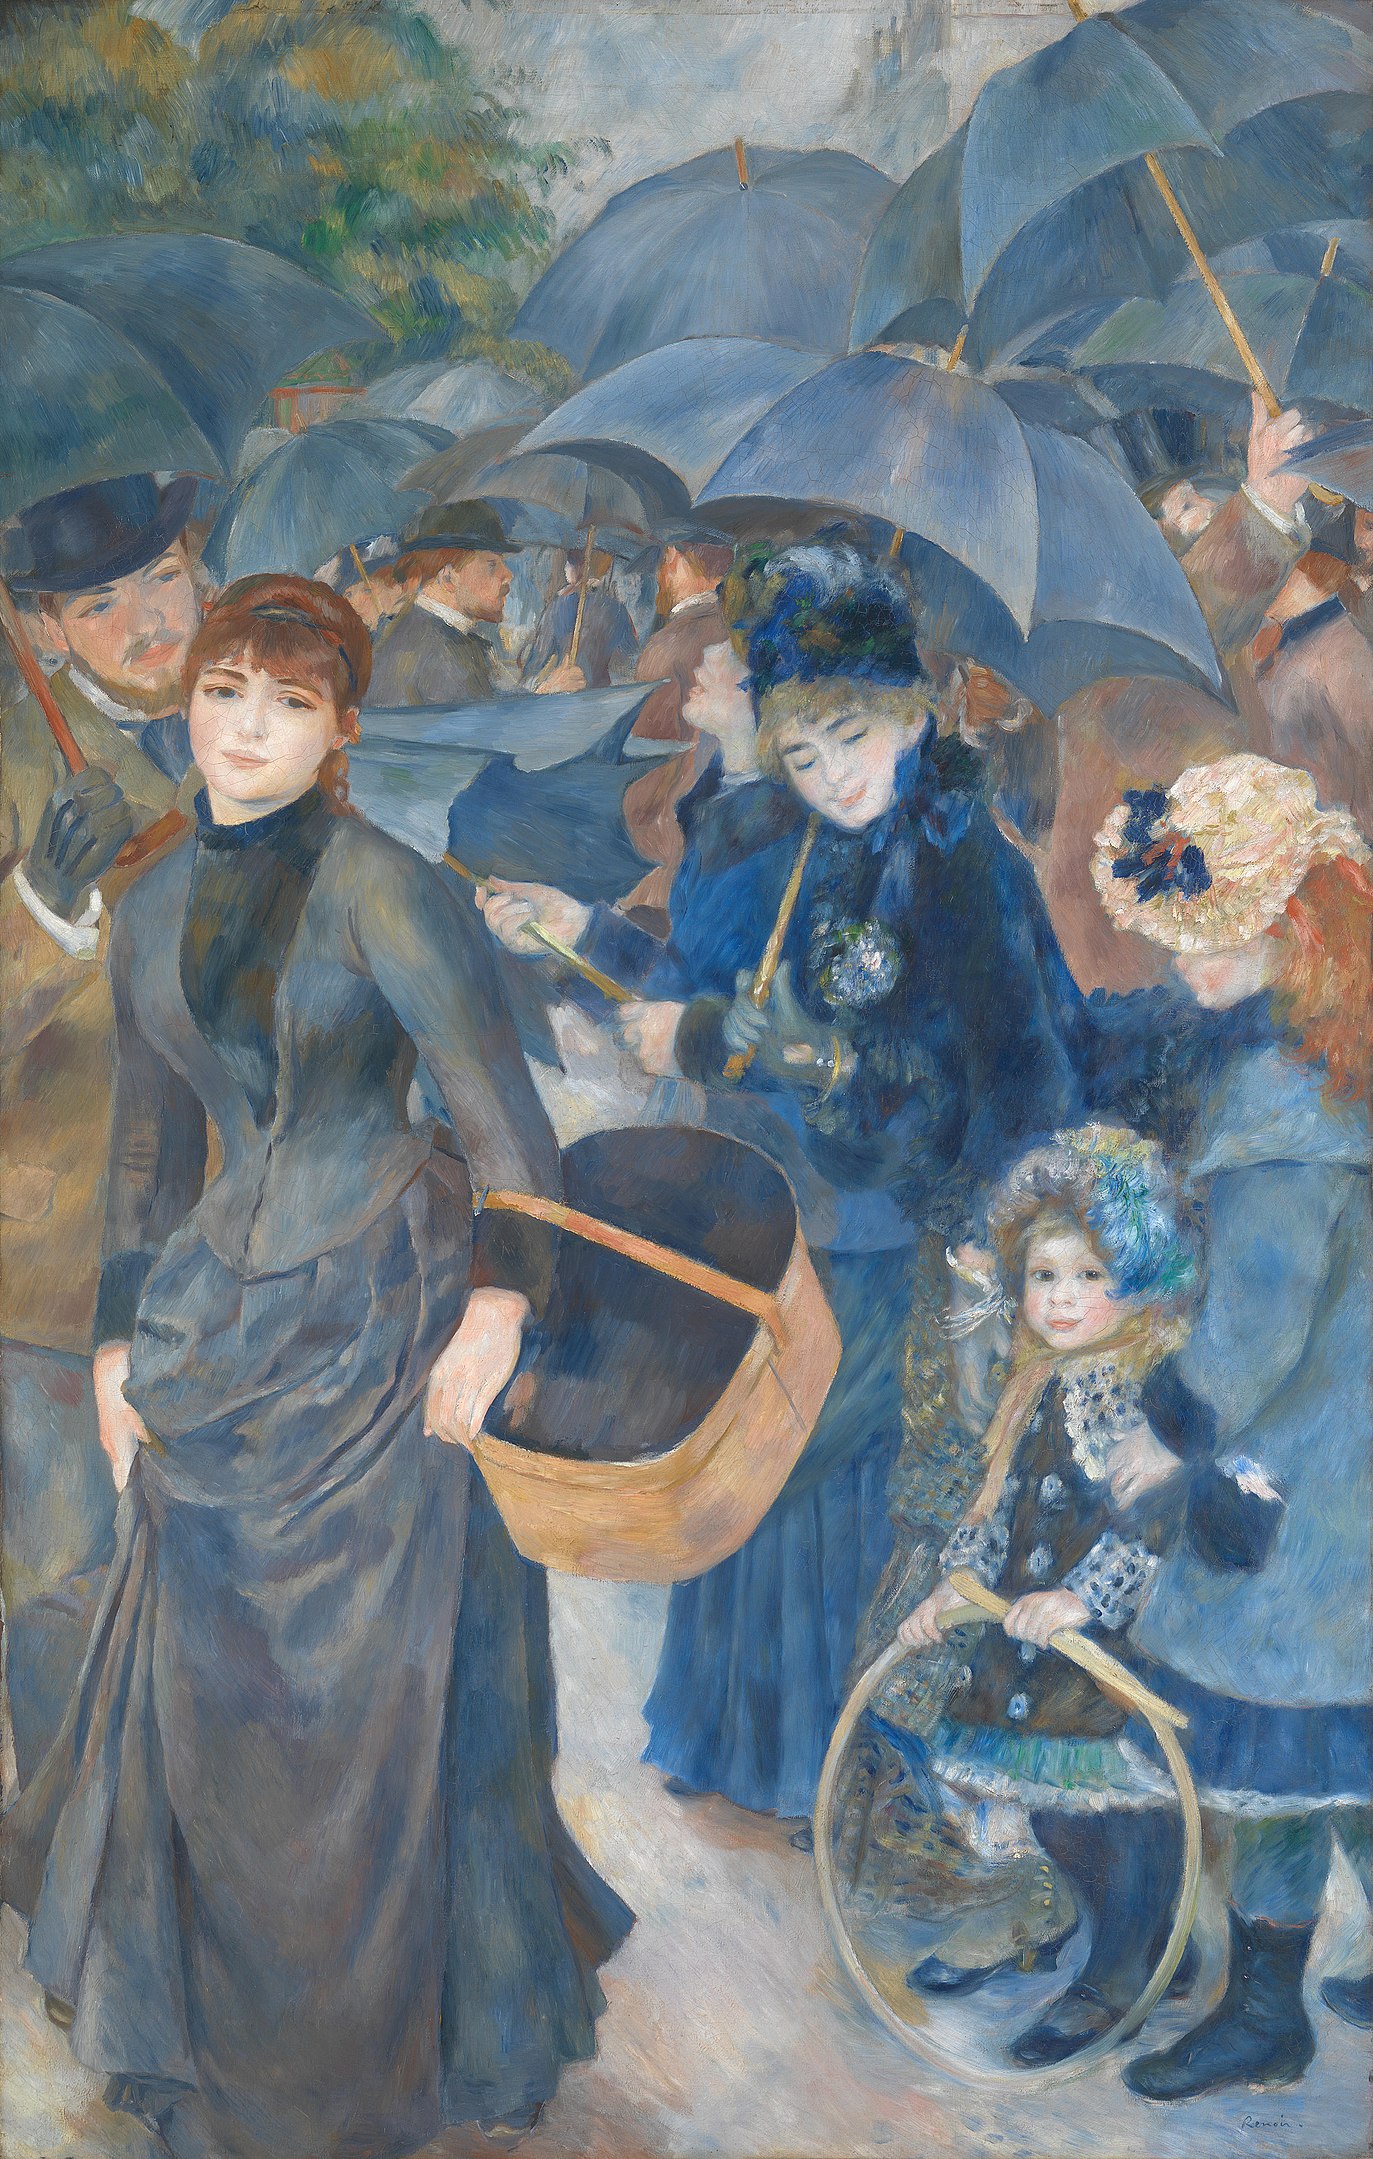 Umbrelele by Pierre-Auguste Renoir - cca. 1880-1886 - 180.3 × 114.9 cm 